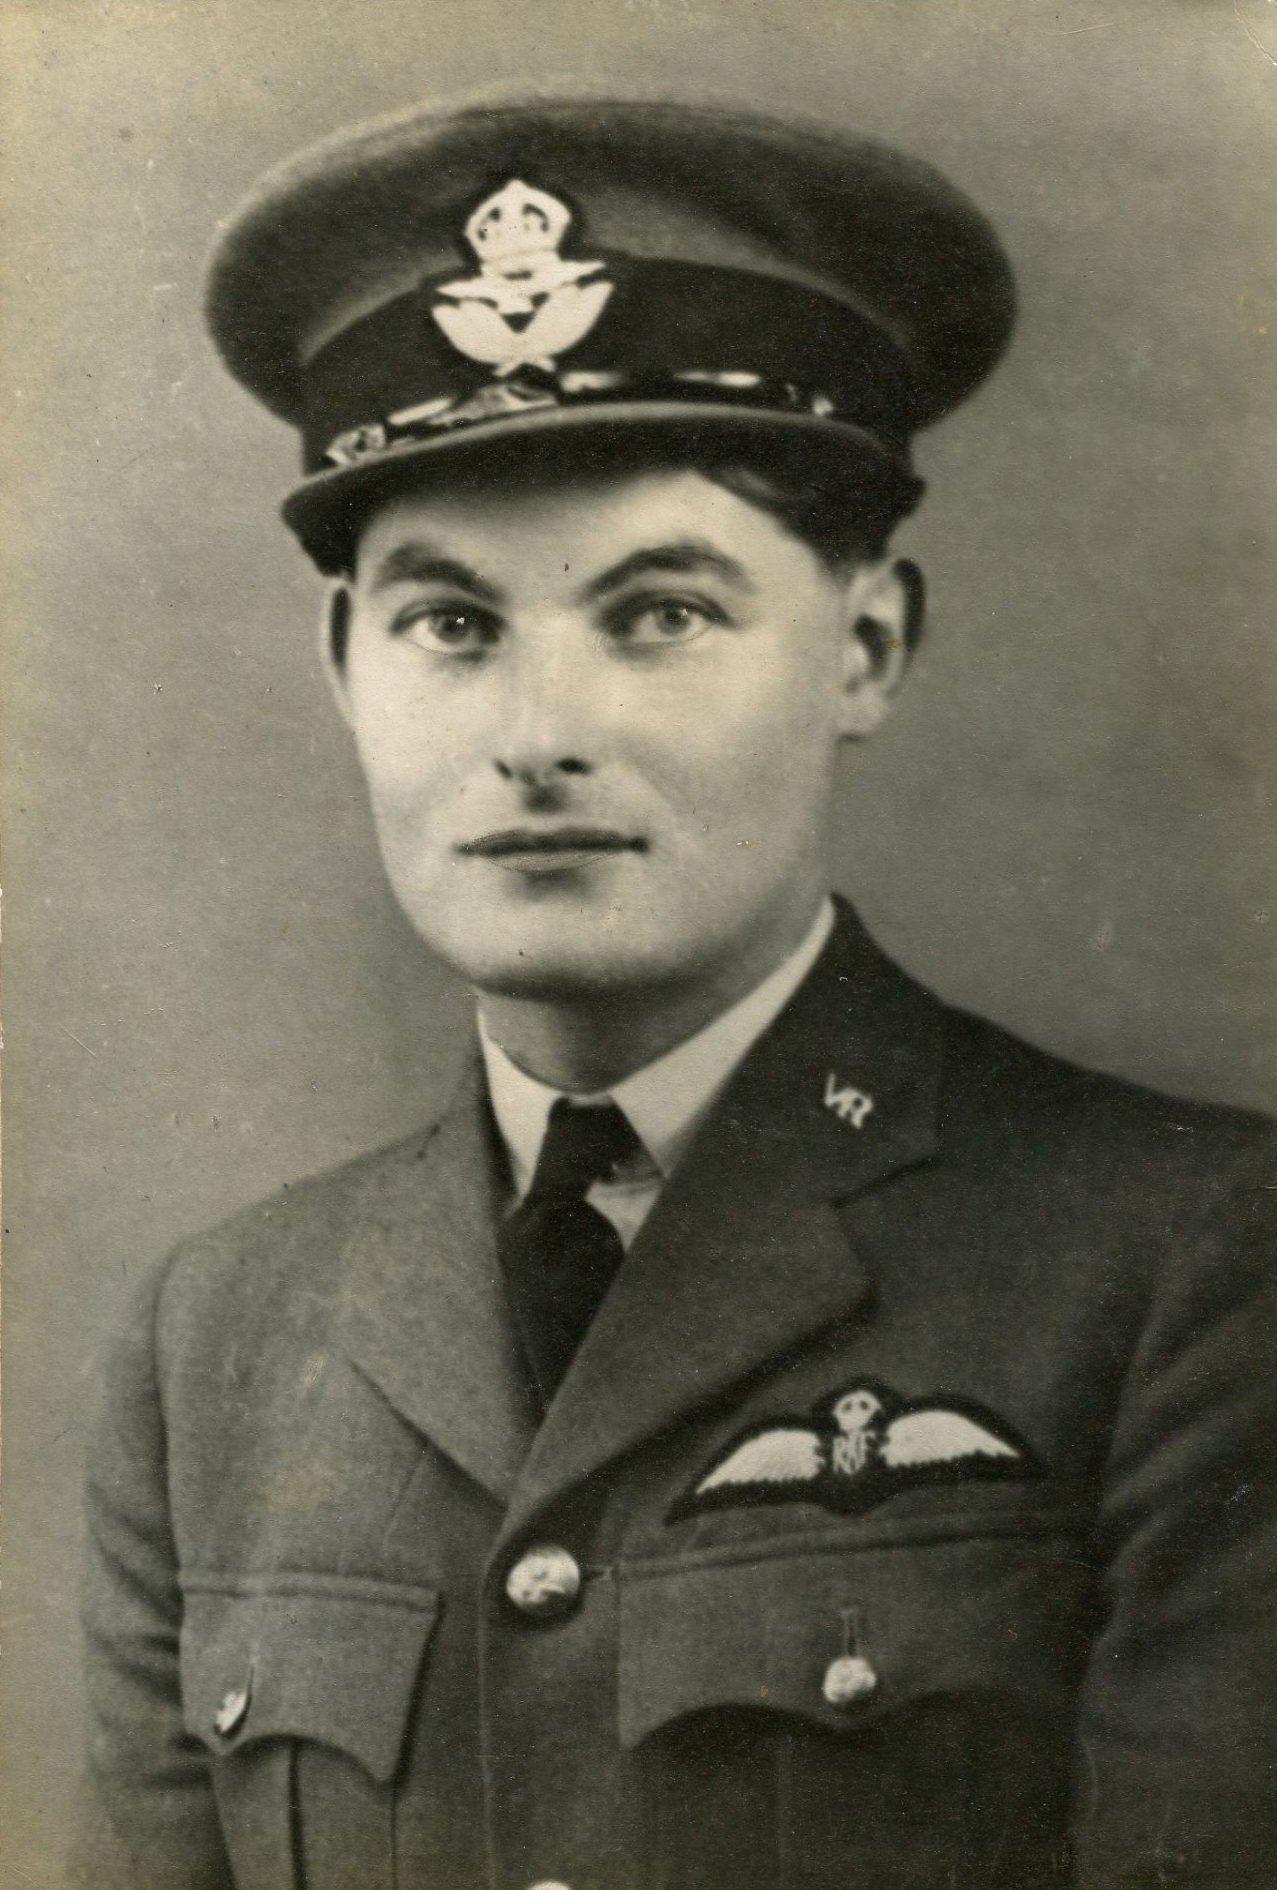 Black and white portrait photo of Flight Lieutenant Tilbury